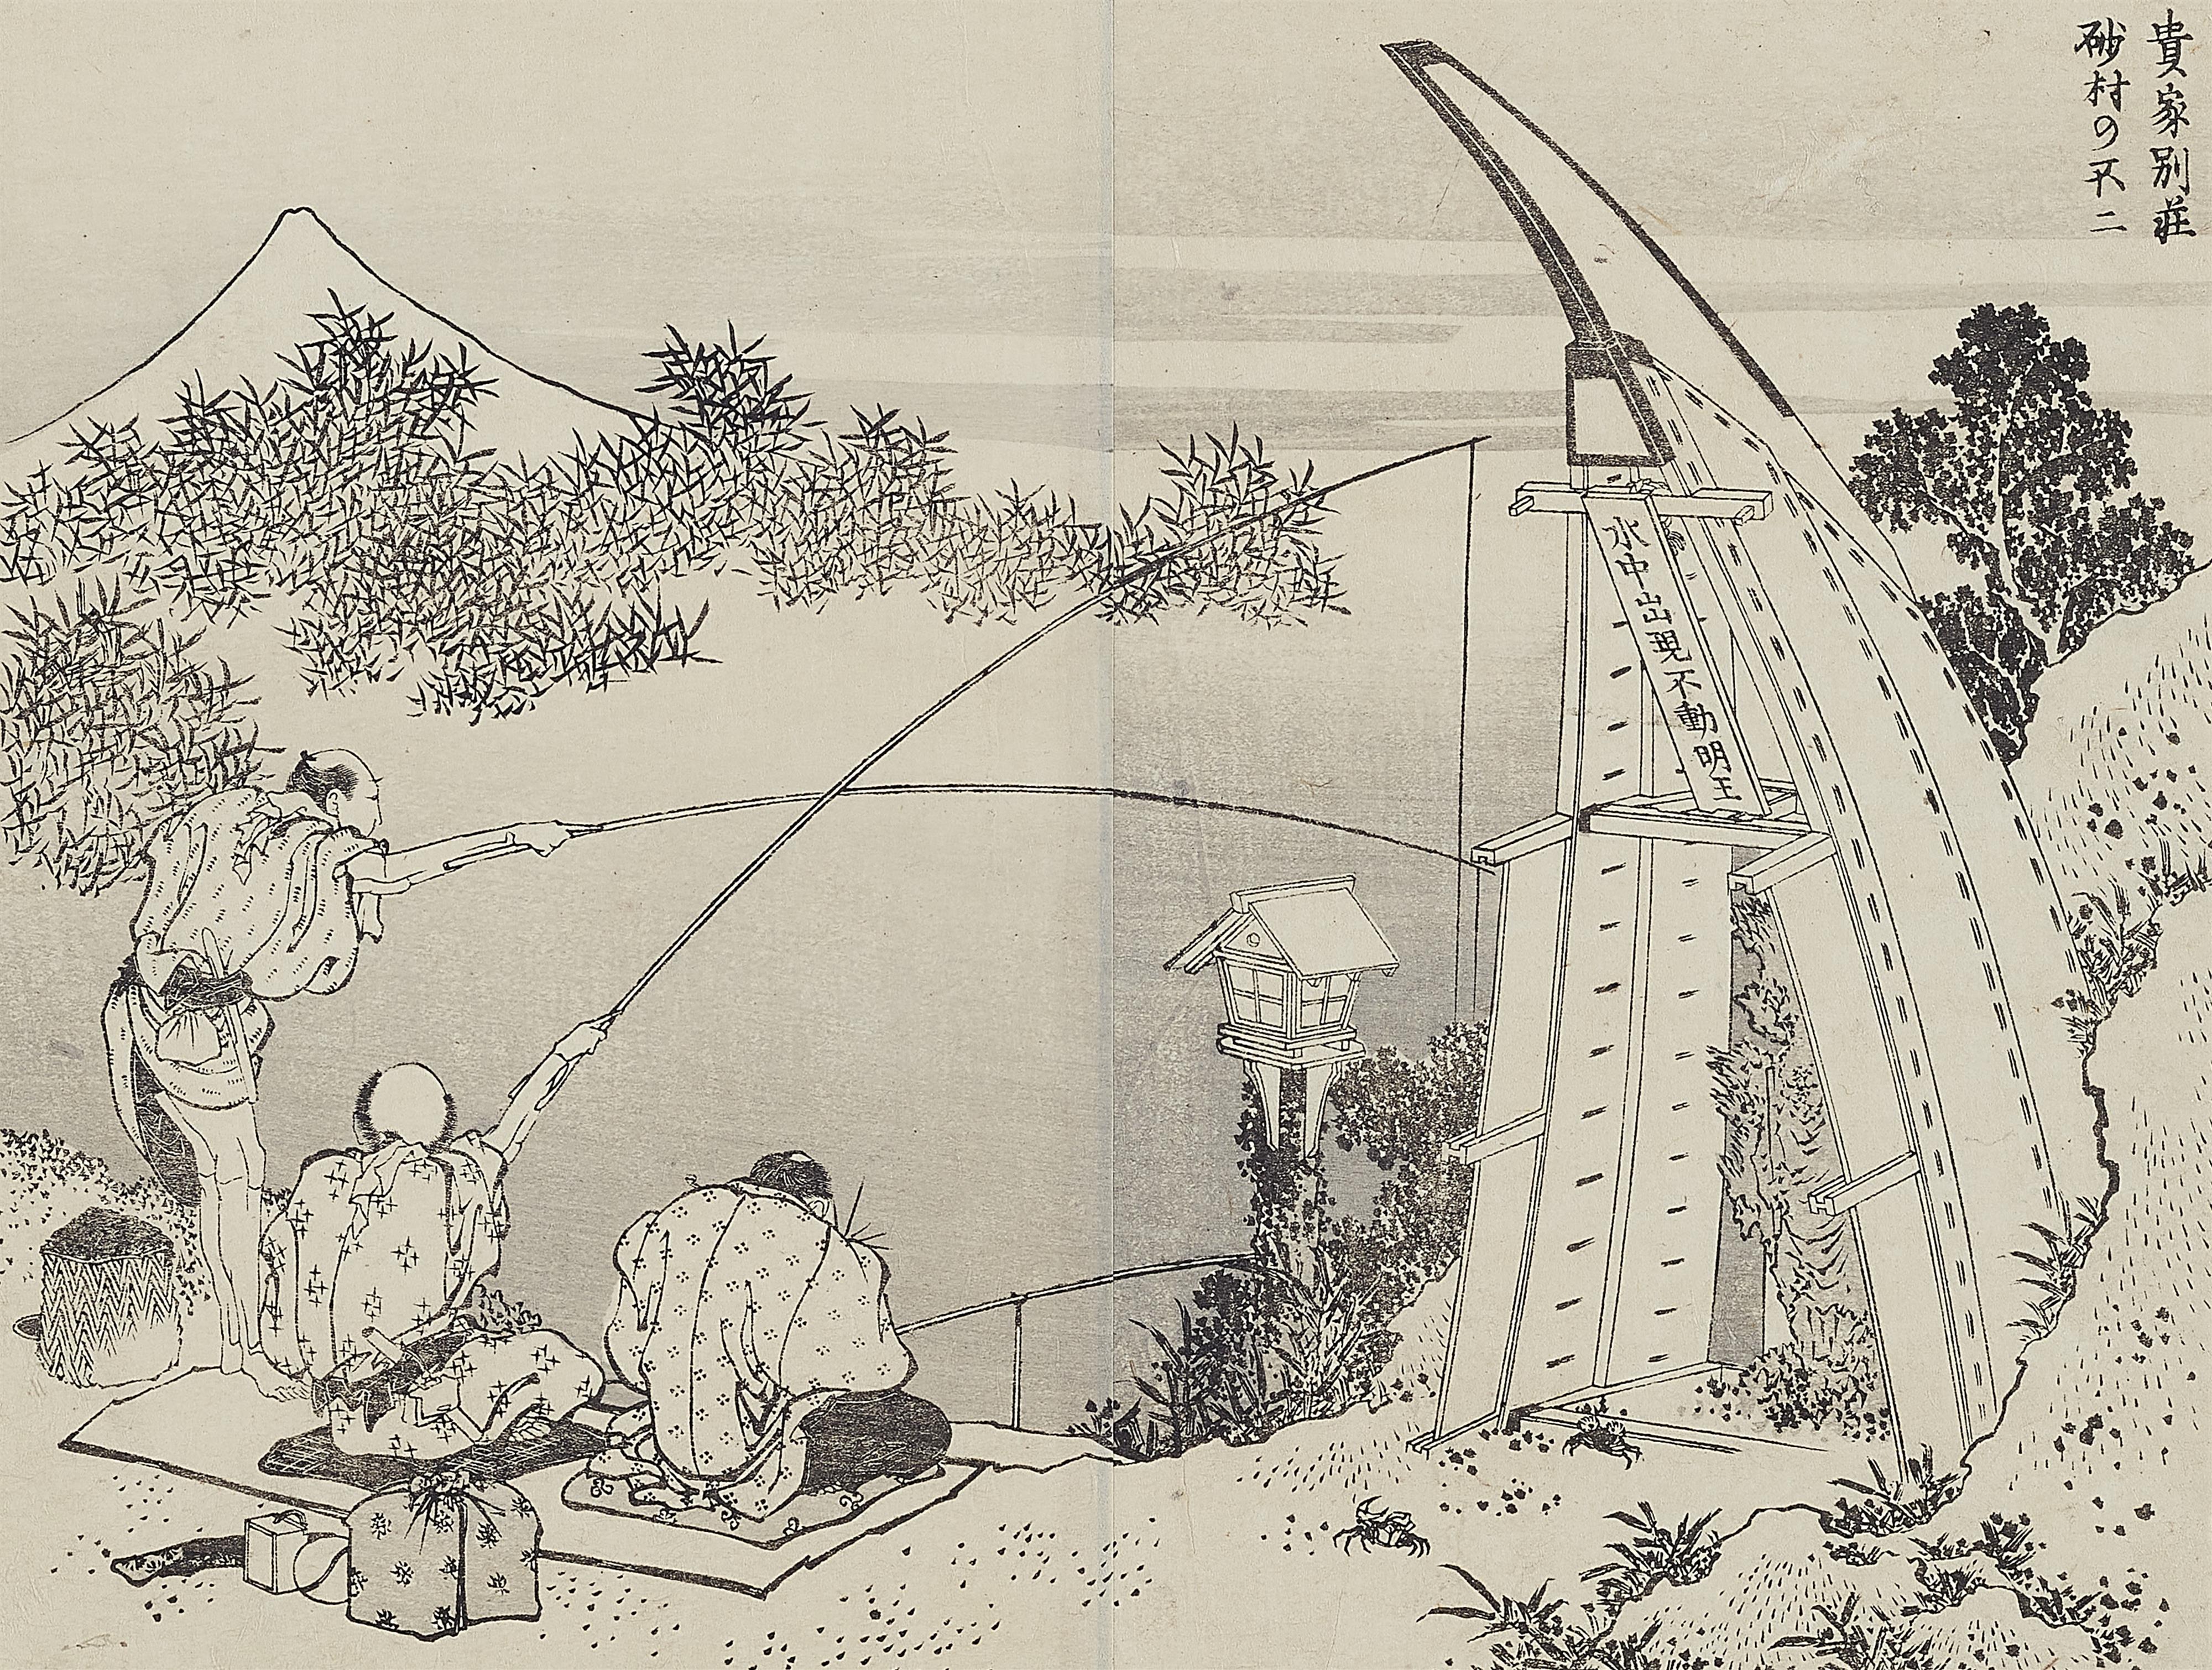 Katsushika Hokusai - Black and white illustrations from the album Fugaku hyakkei - image-15